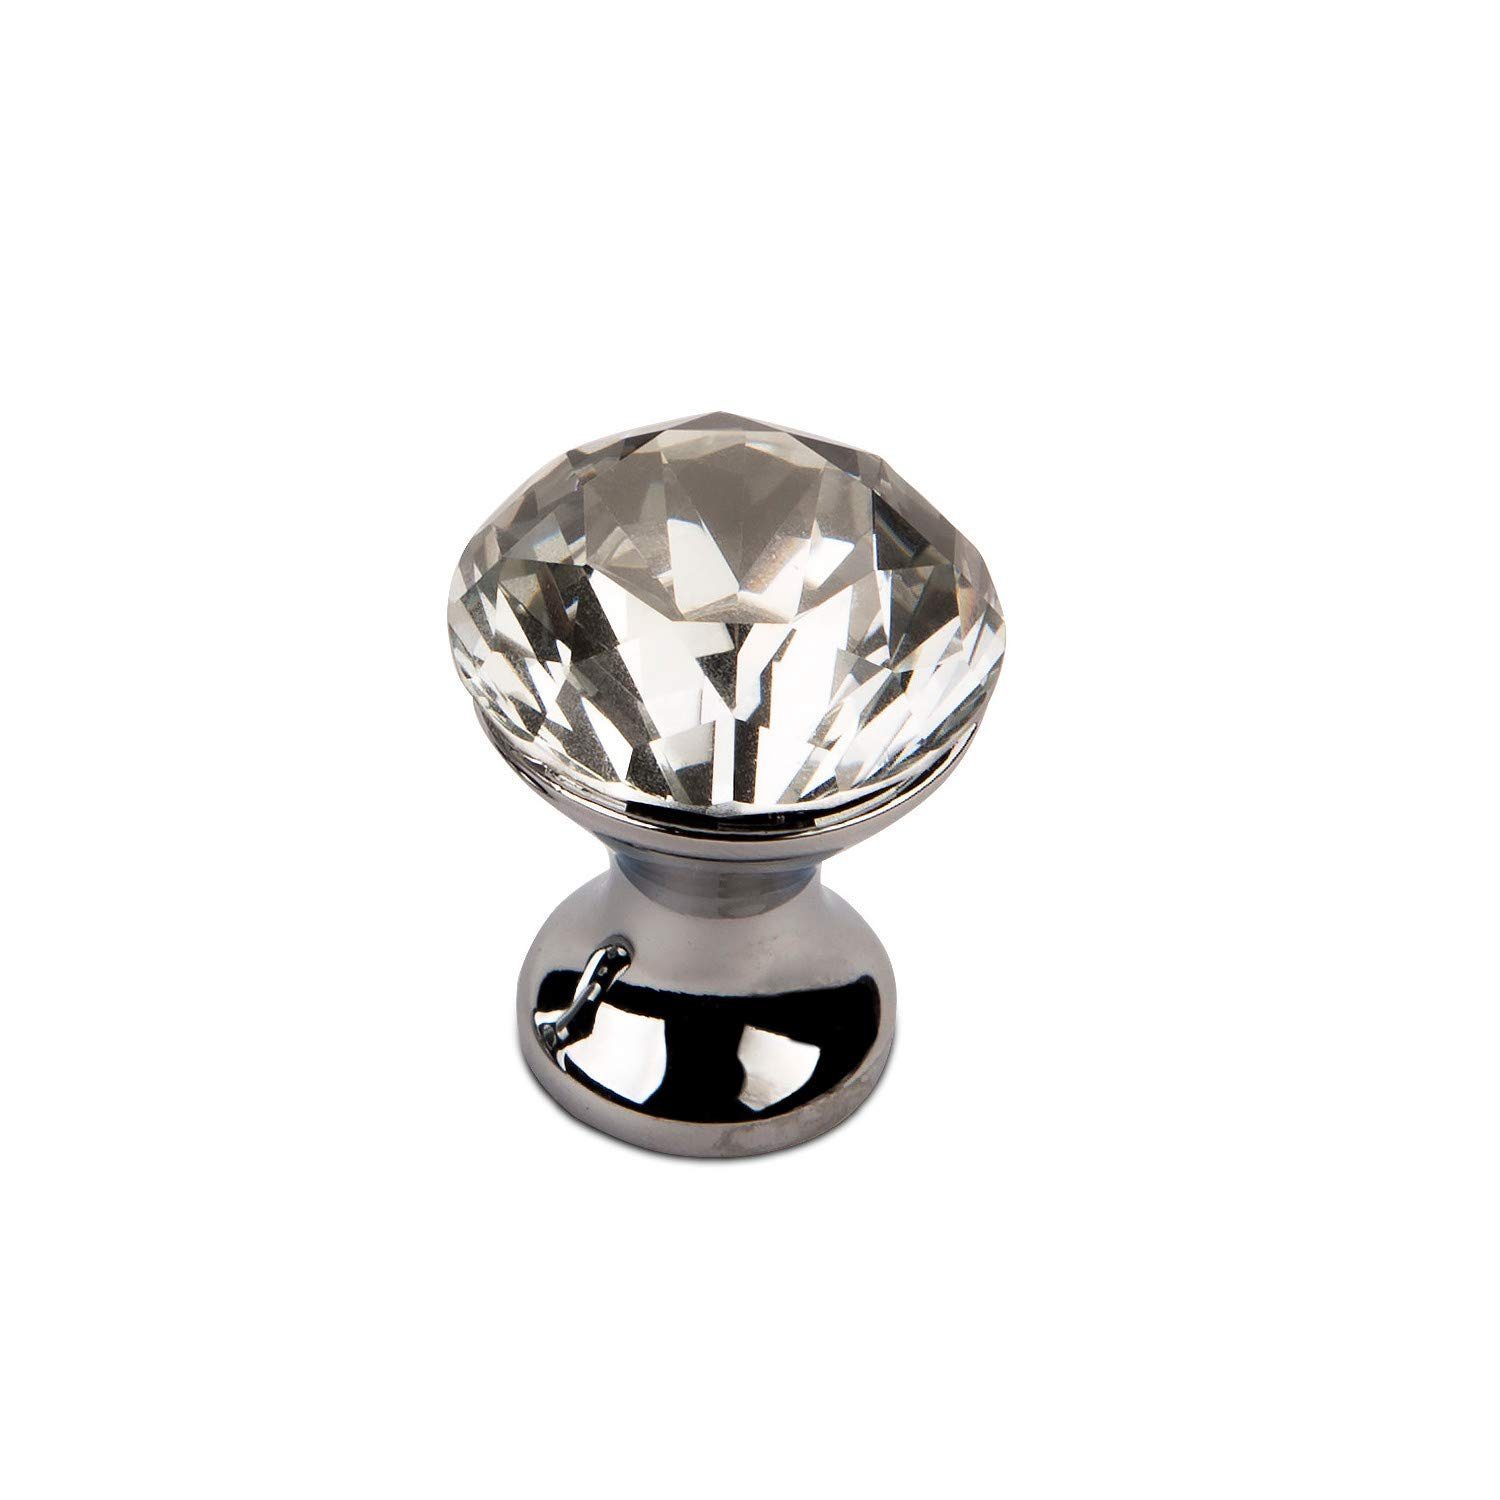 SO-TECH® Möbelknopf Crystal-Line Chrom / Kristallglas, glamour dekorativ Knopf Knauf incl. Schraube